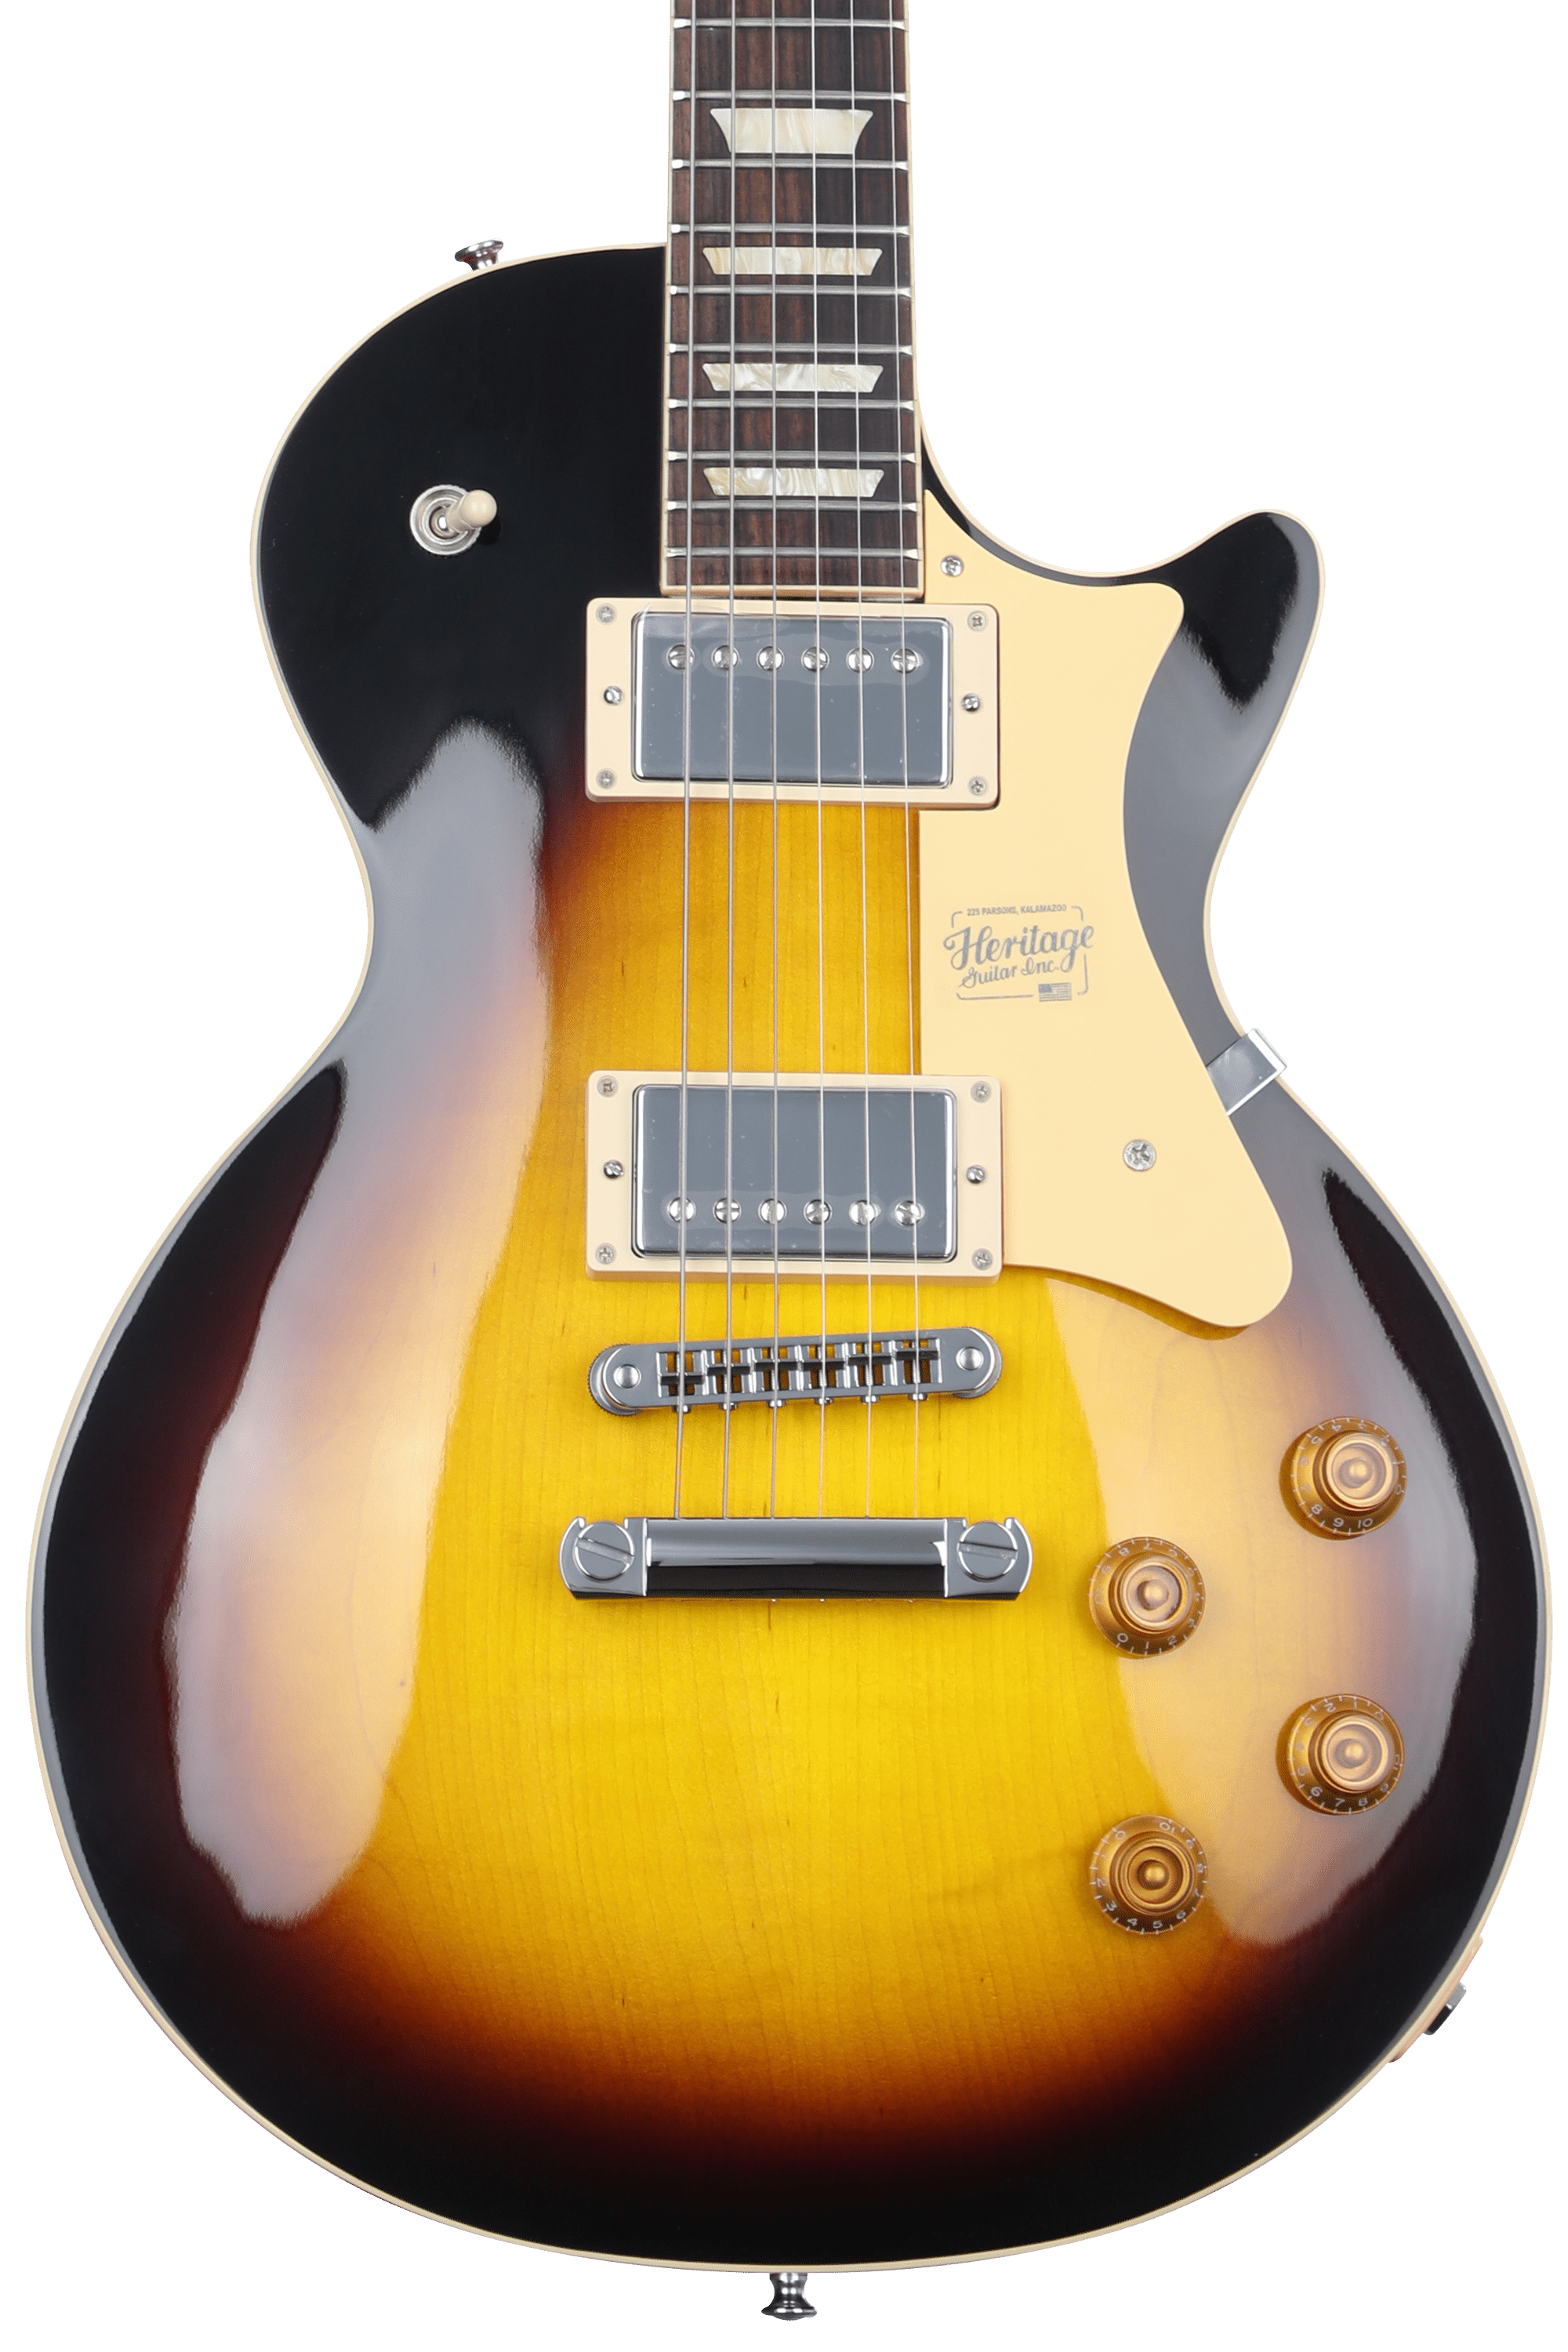 Heritage Standard H-150 Electric Guitar - Original Sunburst